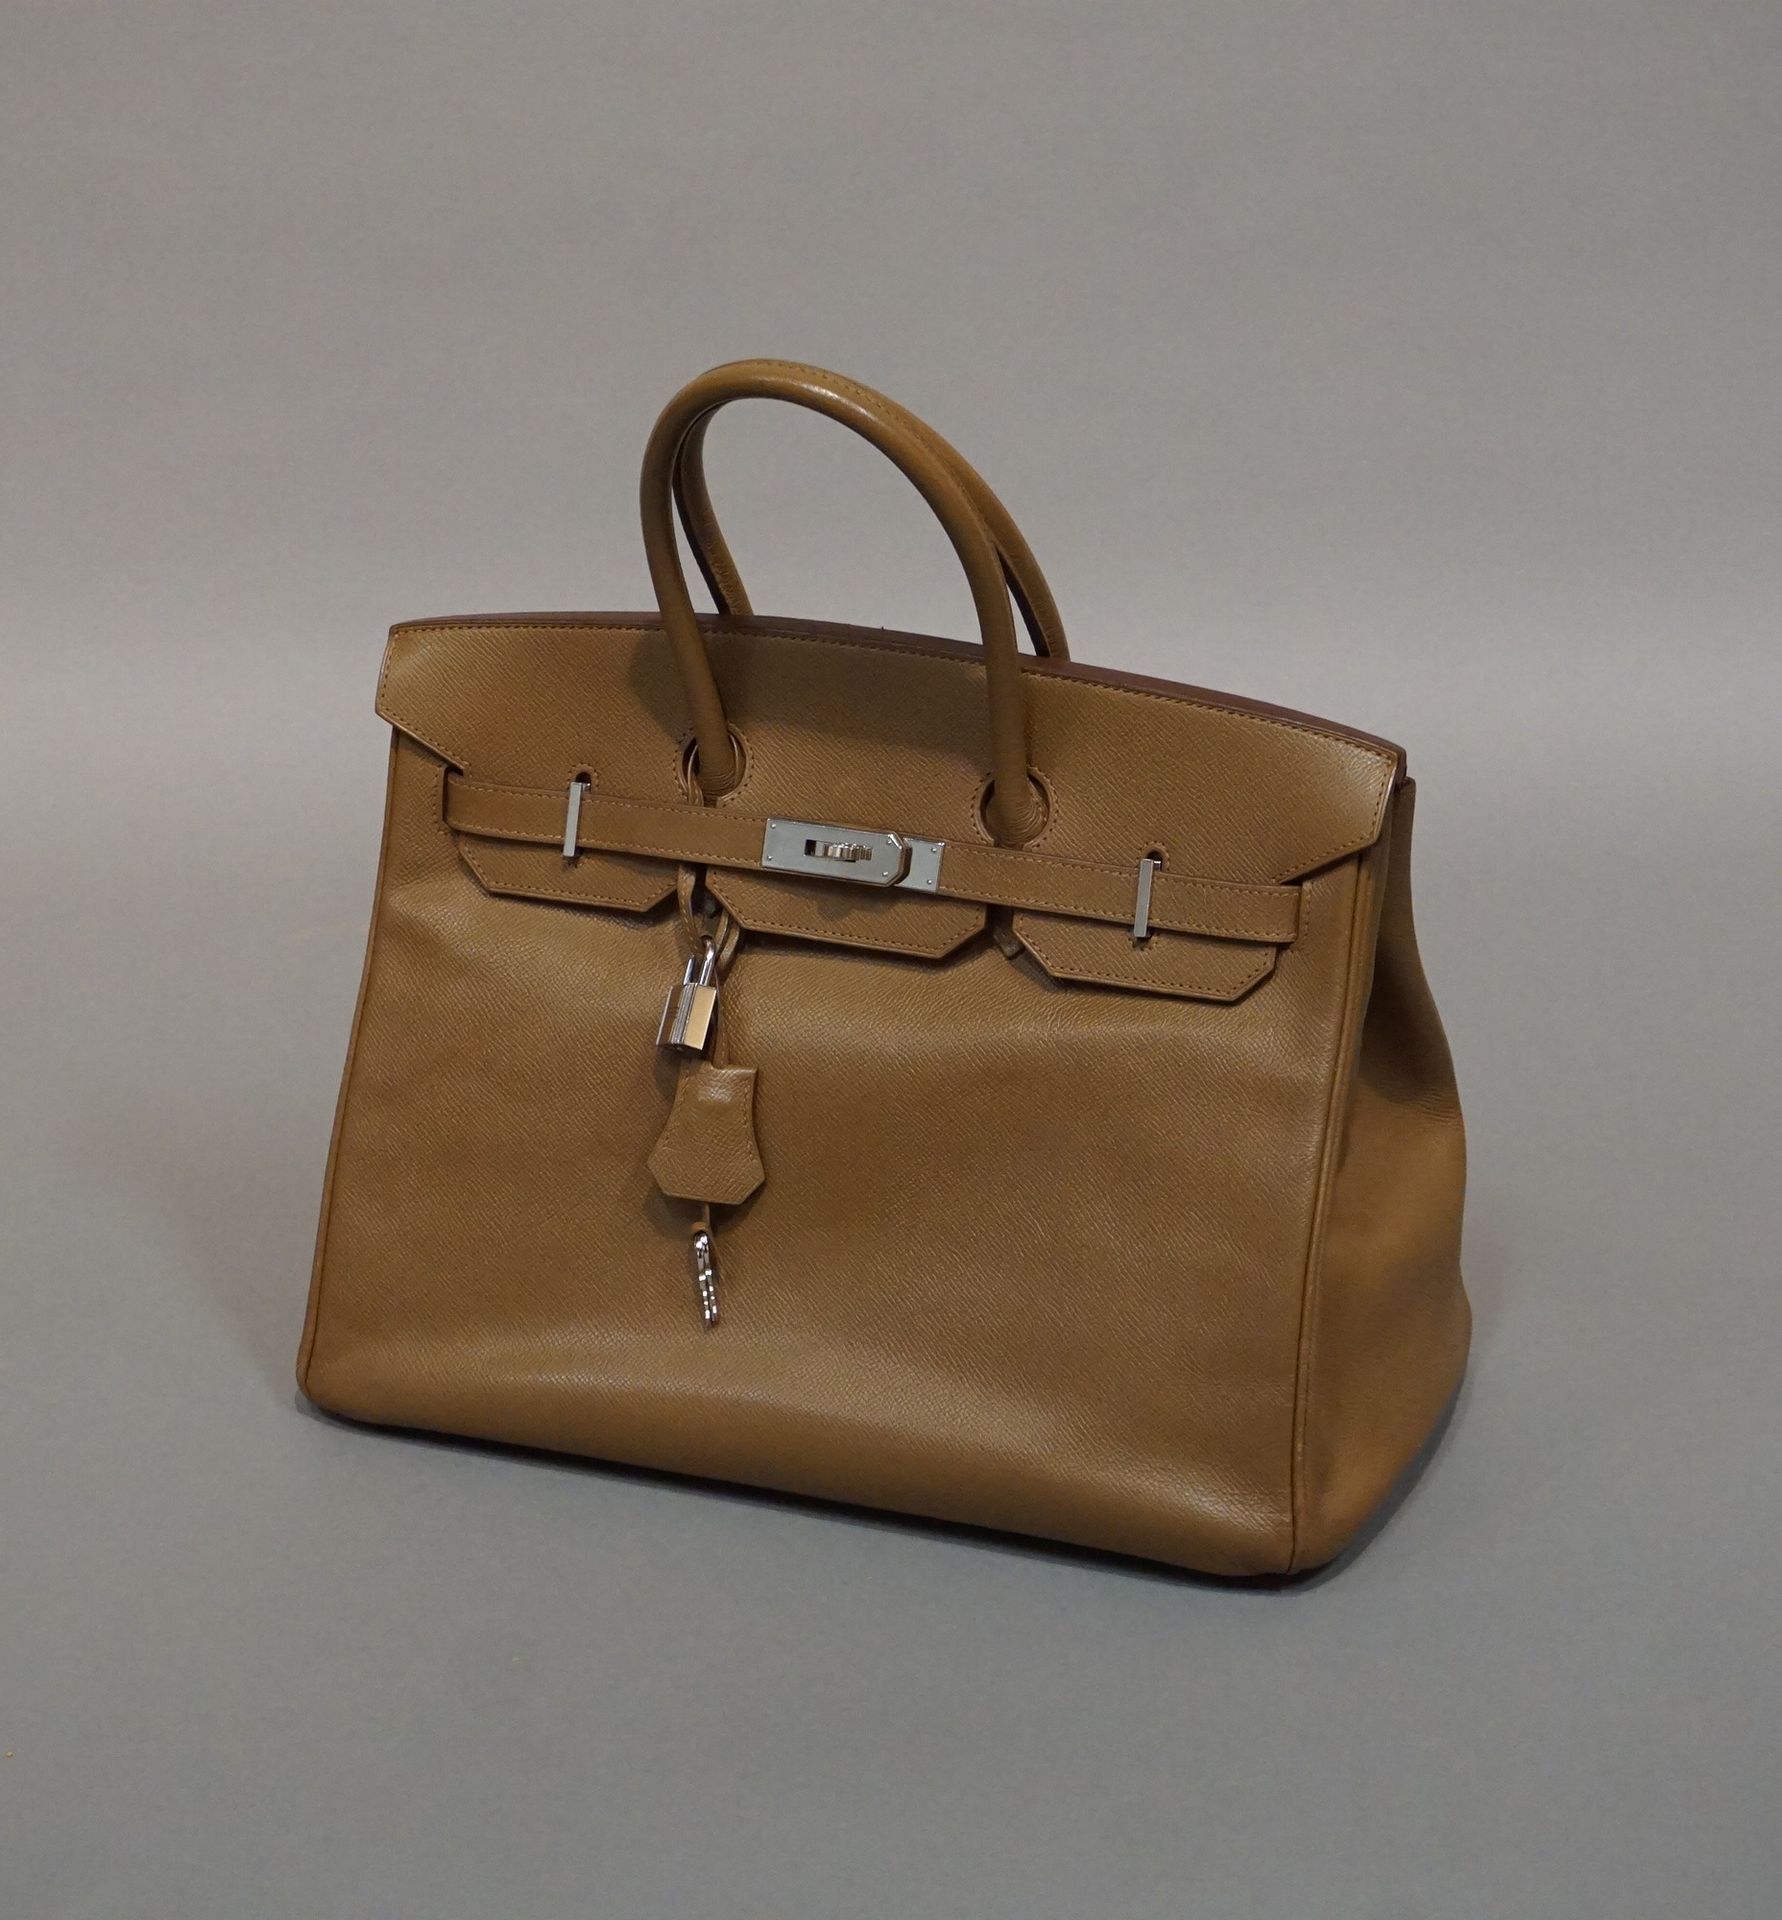 HERMES Birkin" handbag in beige grained leather. With padlock (very good conditi&hellip;